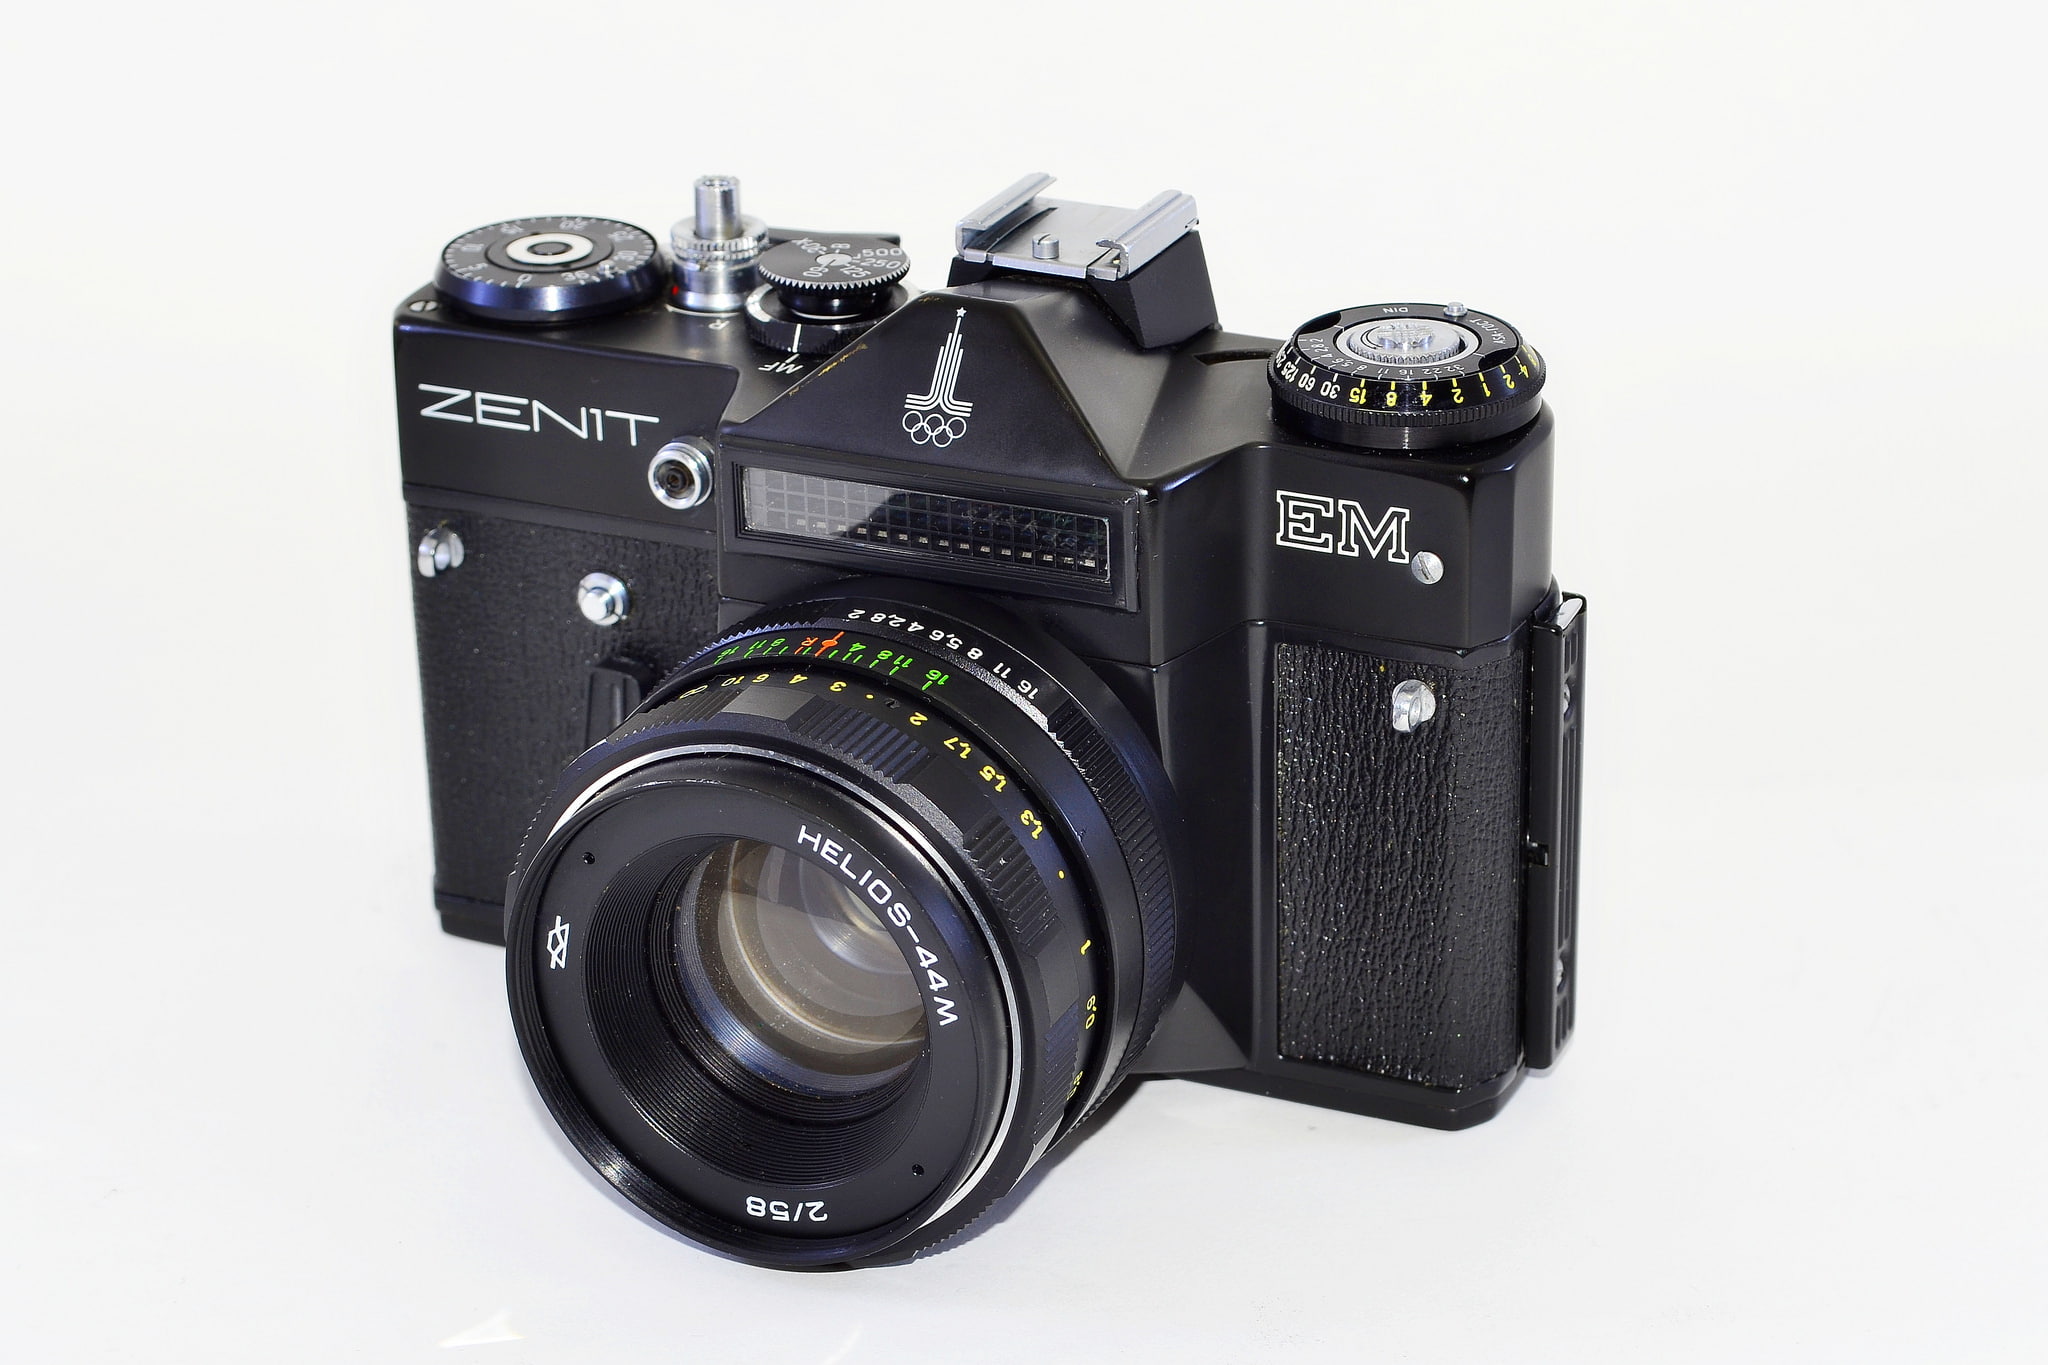 camera, Zenit, the camera, lens, Zenit EM